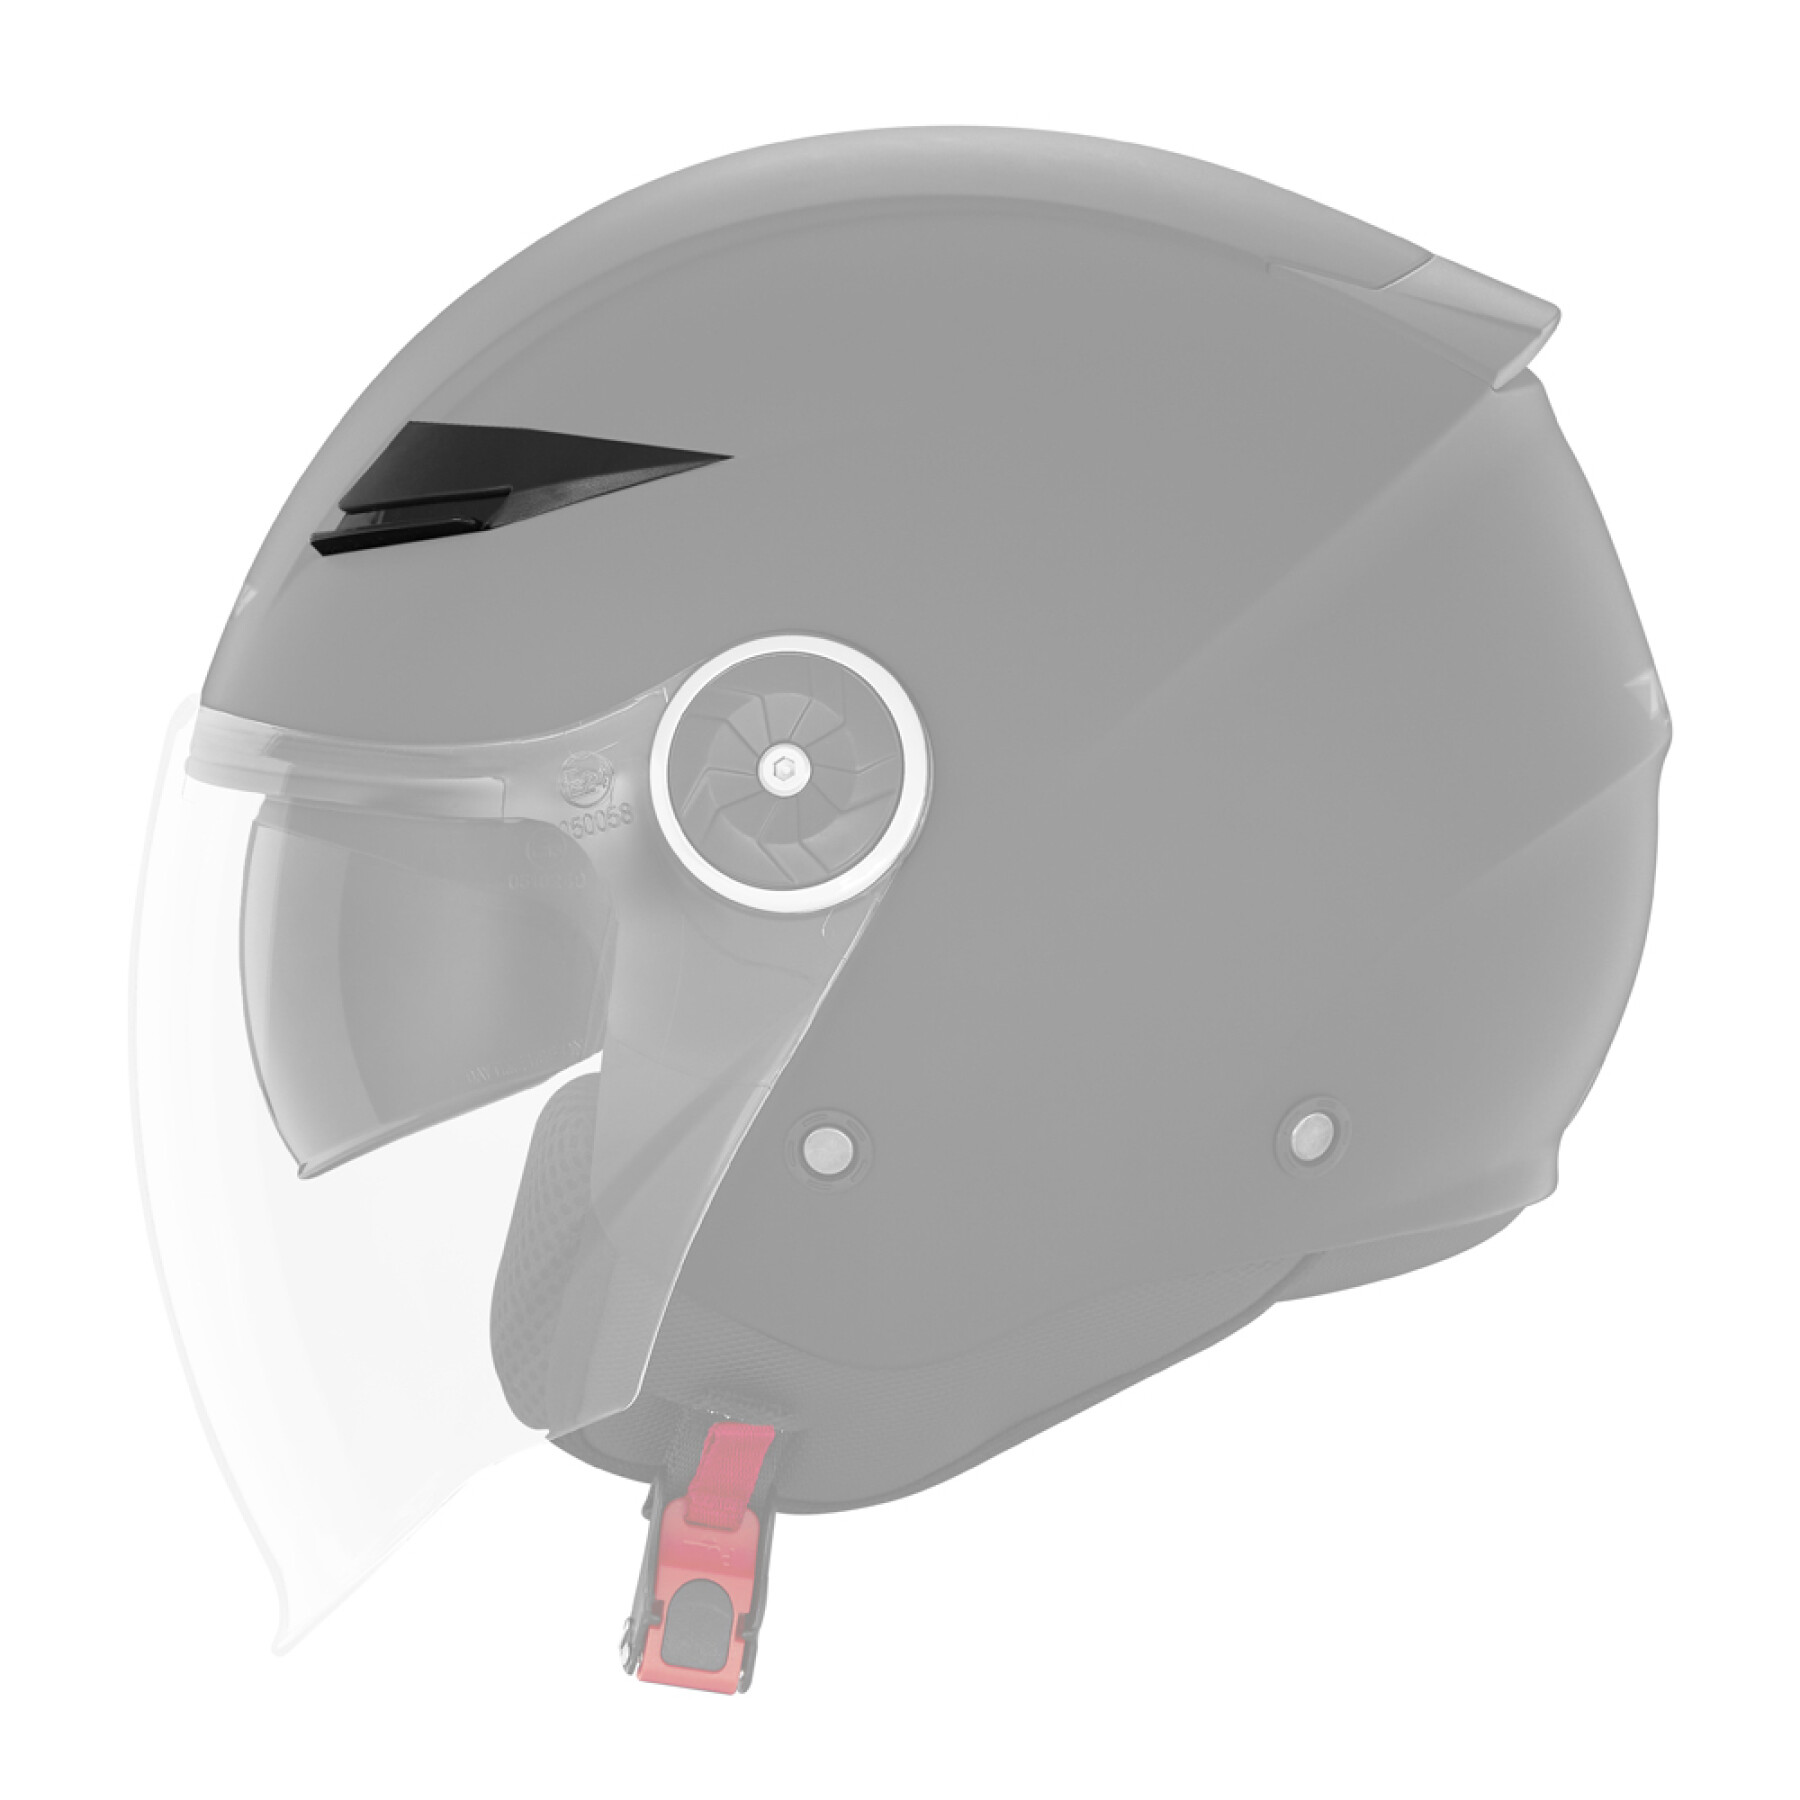 Ventilazione casco moto superiore Nox N 181